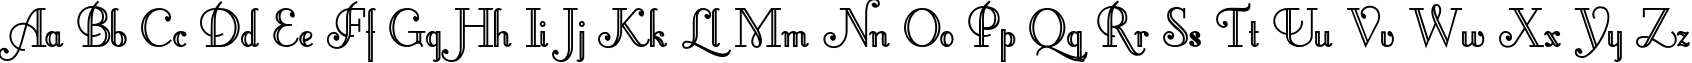 Пример написания английского алфавита шрифтом LittleLordFontleroy